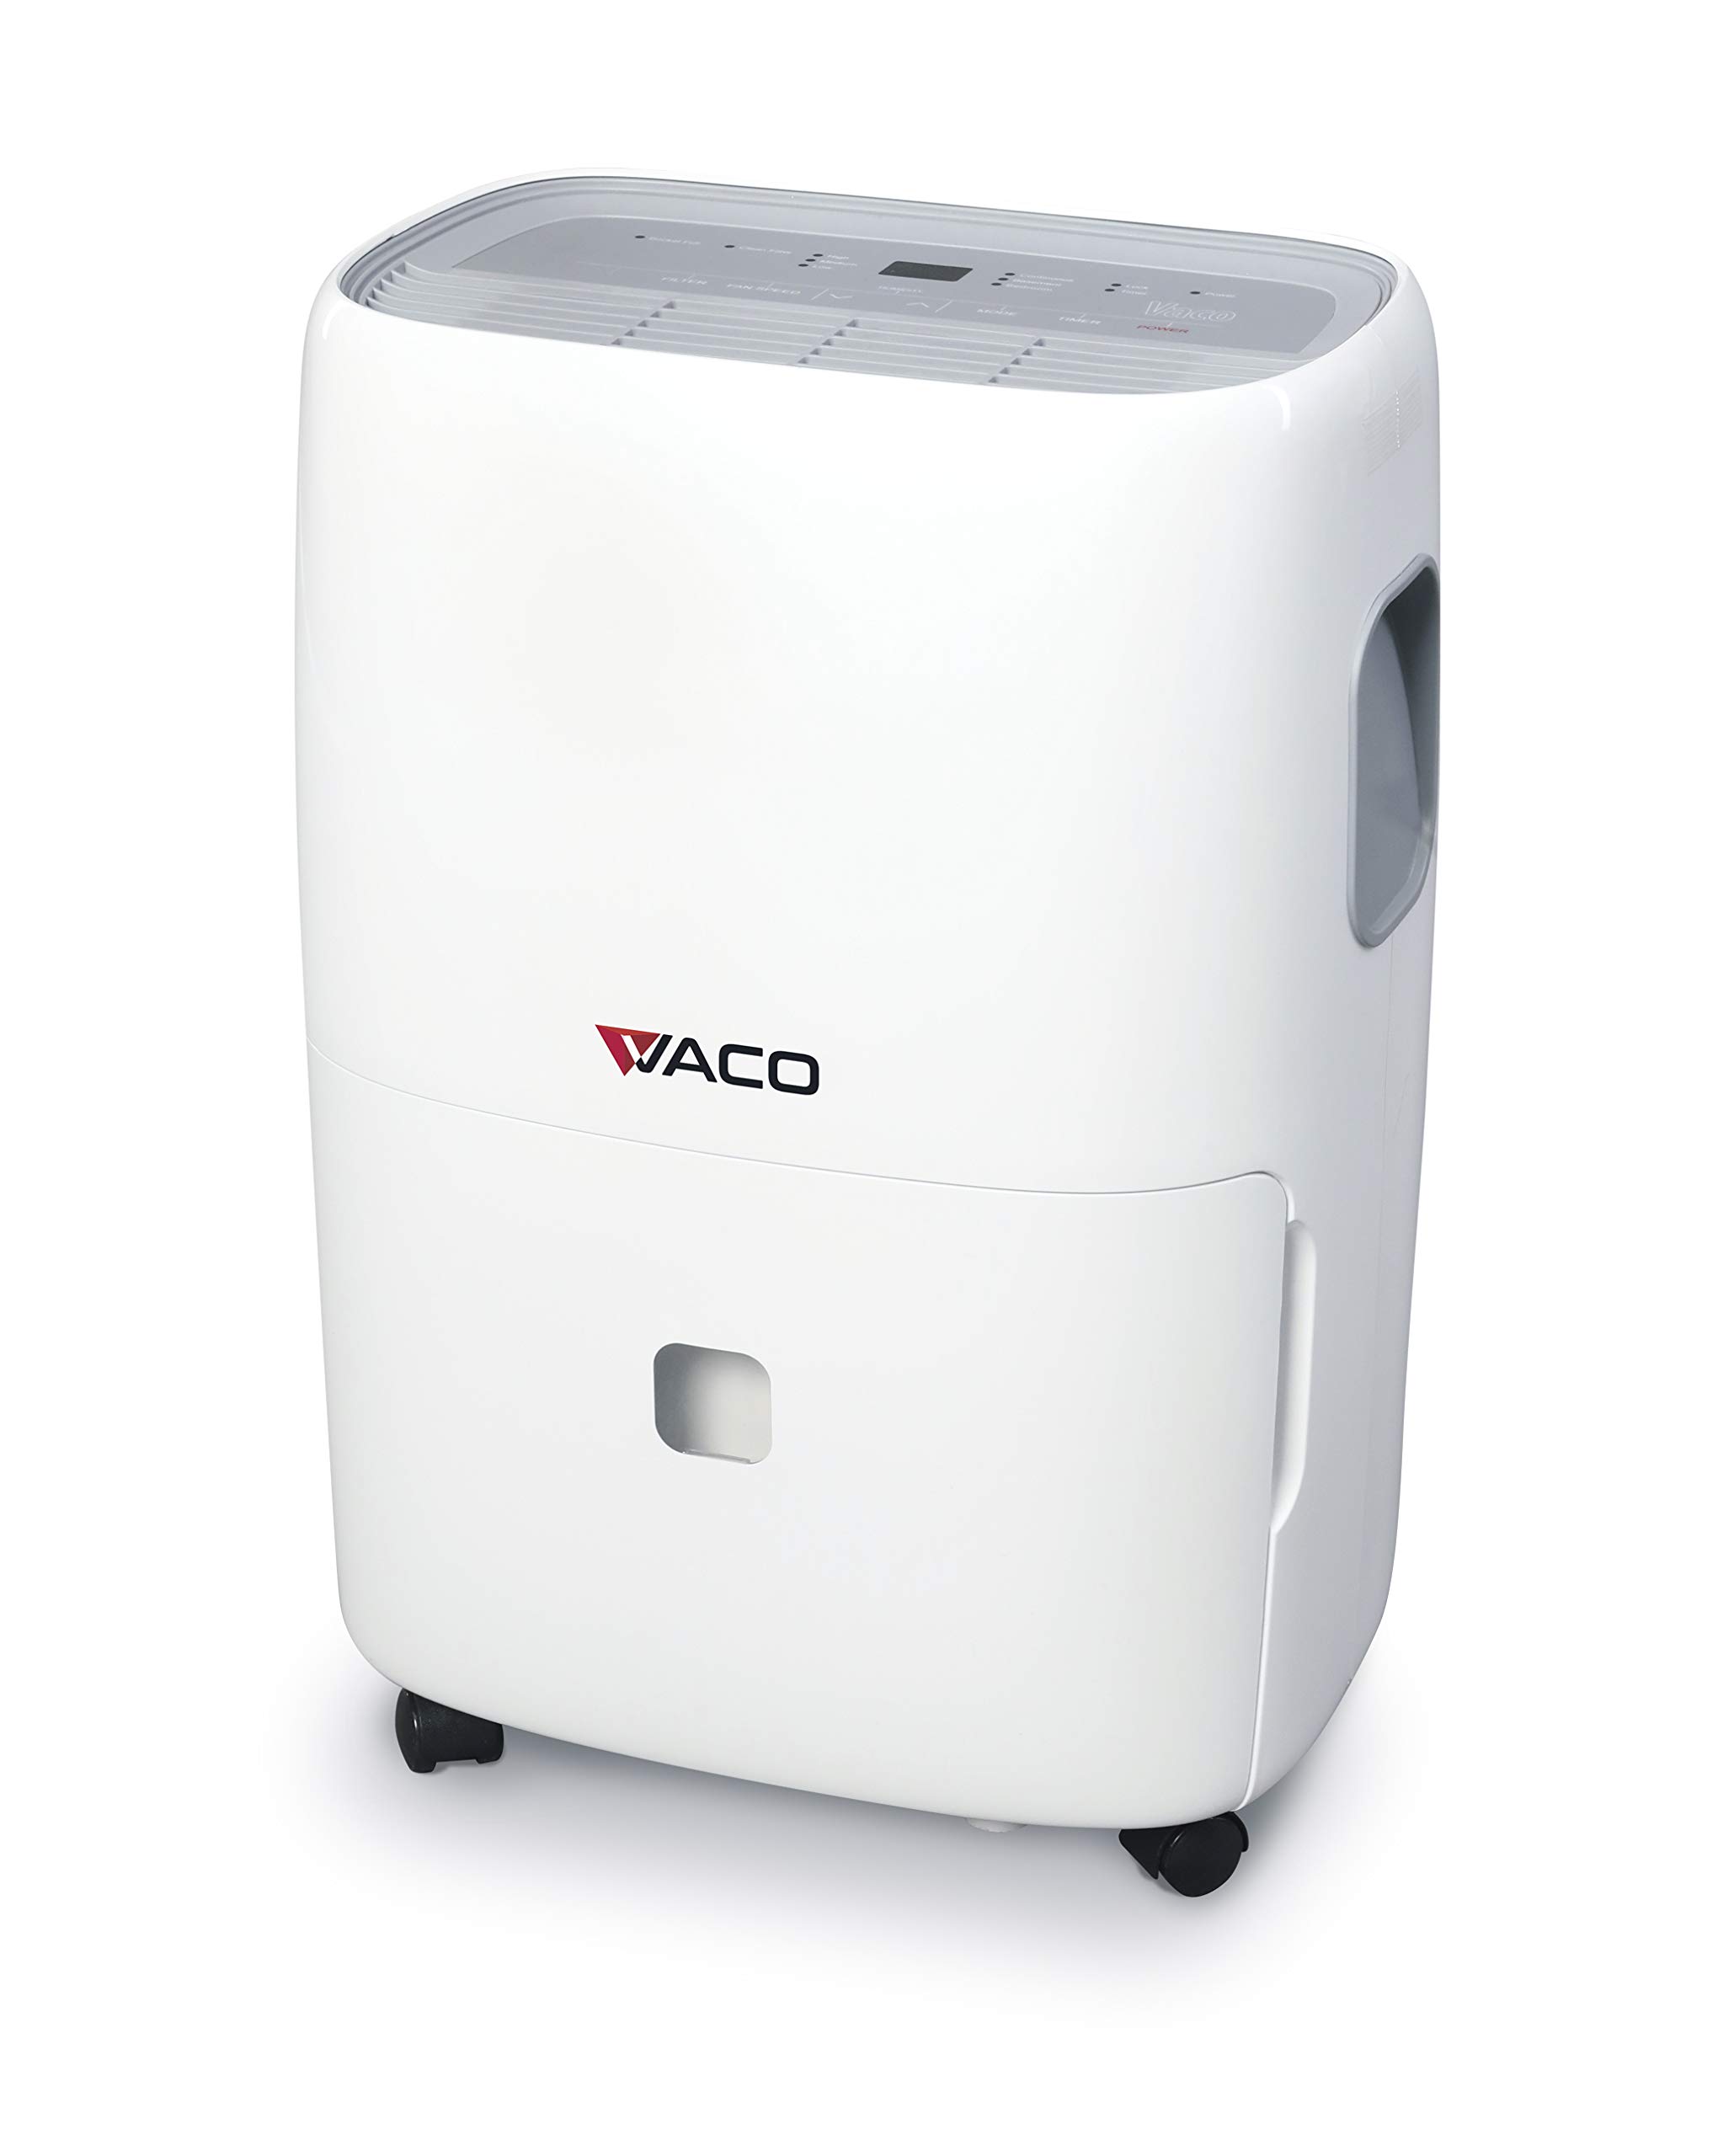 VACO VC3504